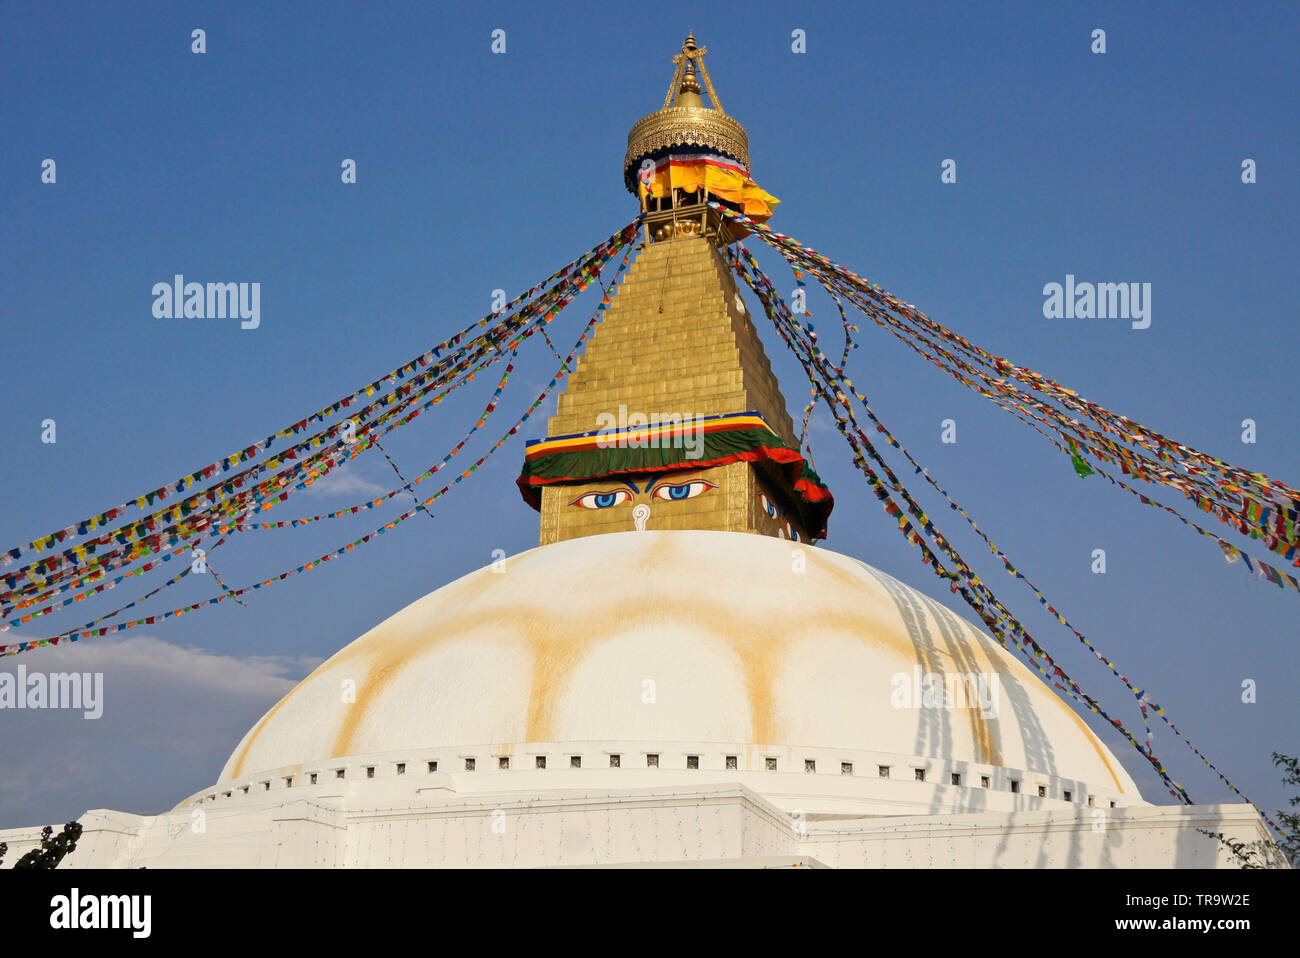 Boudhanath Tibetan Buddhist stupa with colorful prayer flags flying, Kathmandu, Nepal Stock Photo